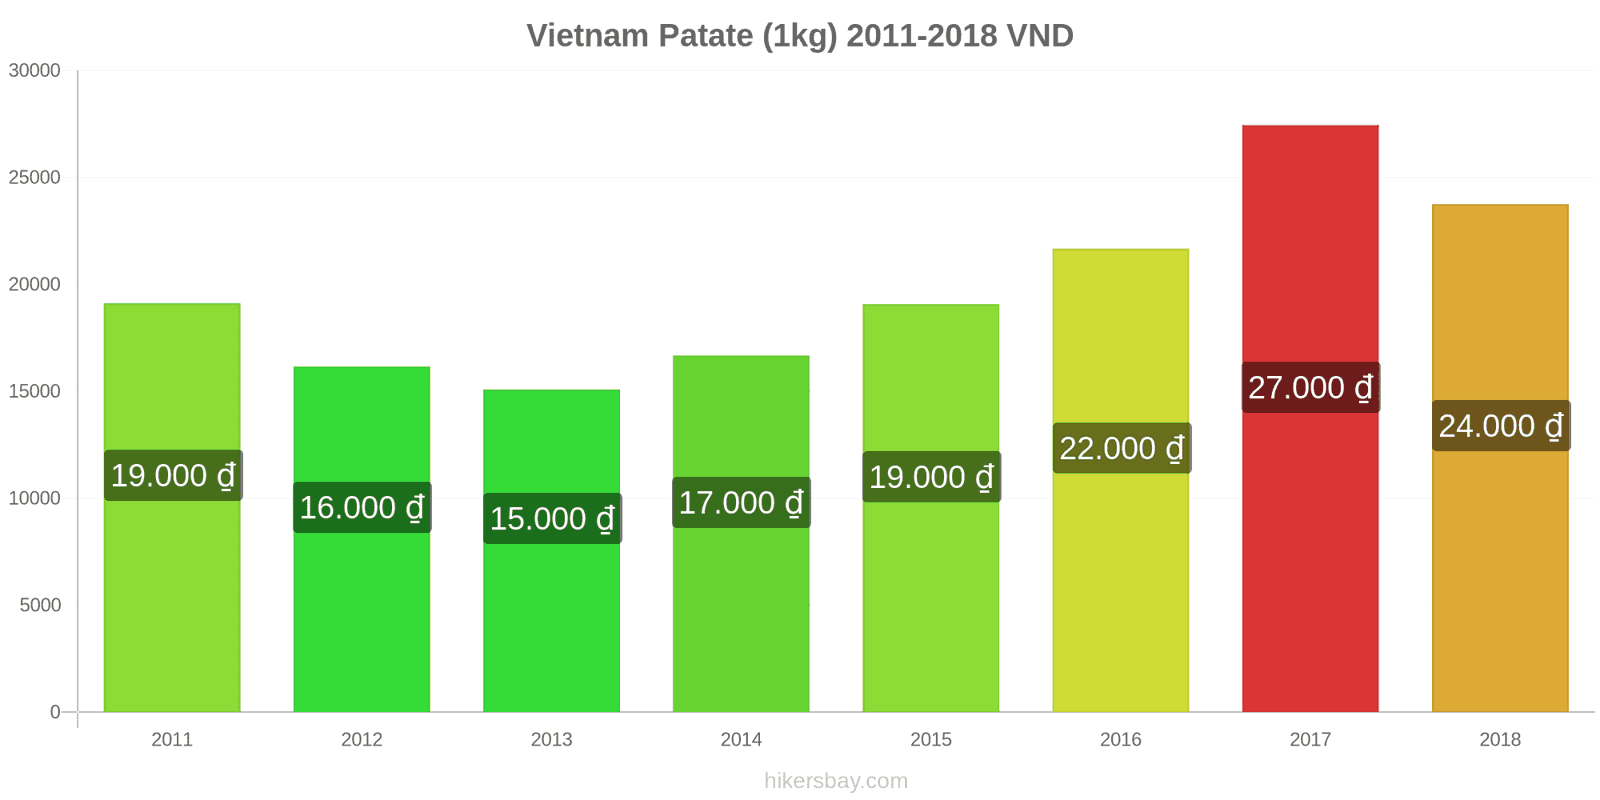 Vietnam cambi di prezzo Patate (1kg) hikersbay.com